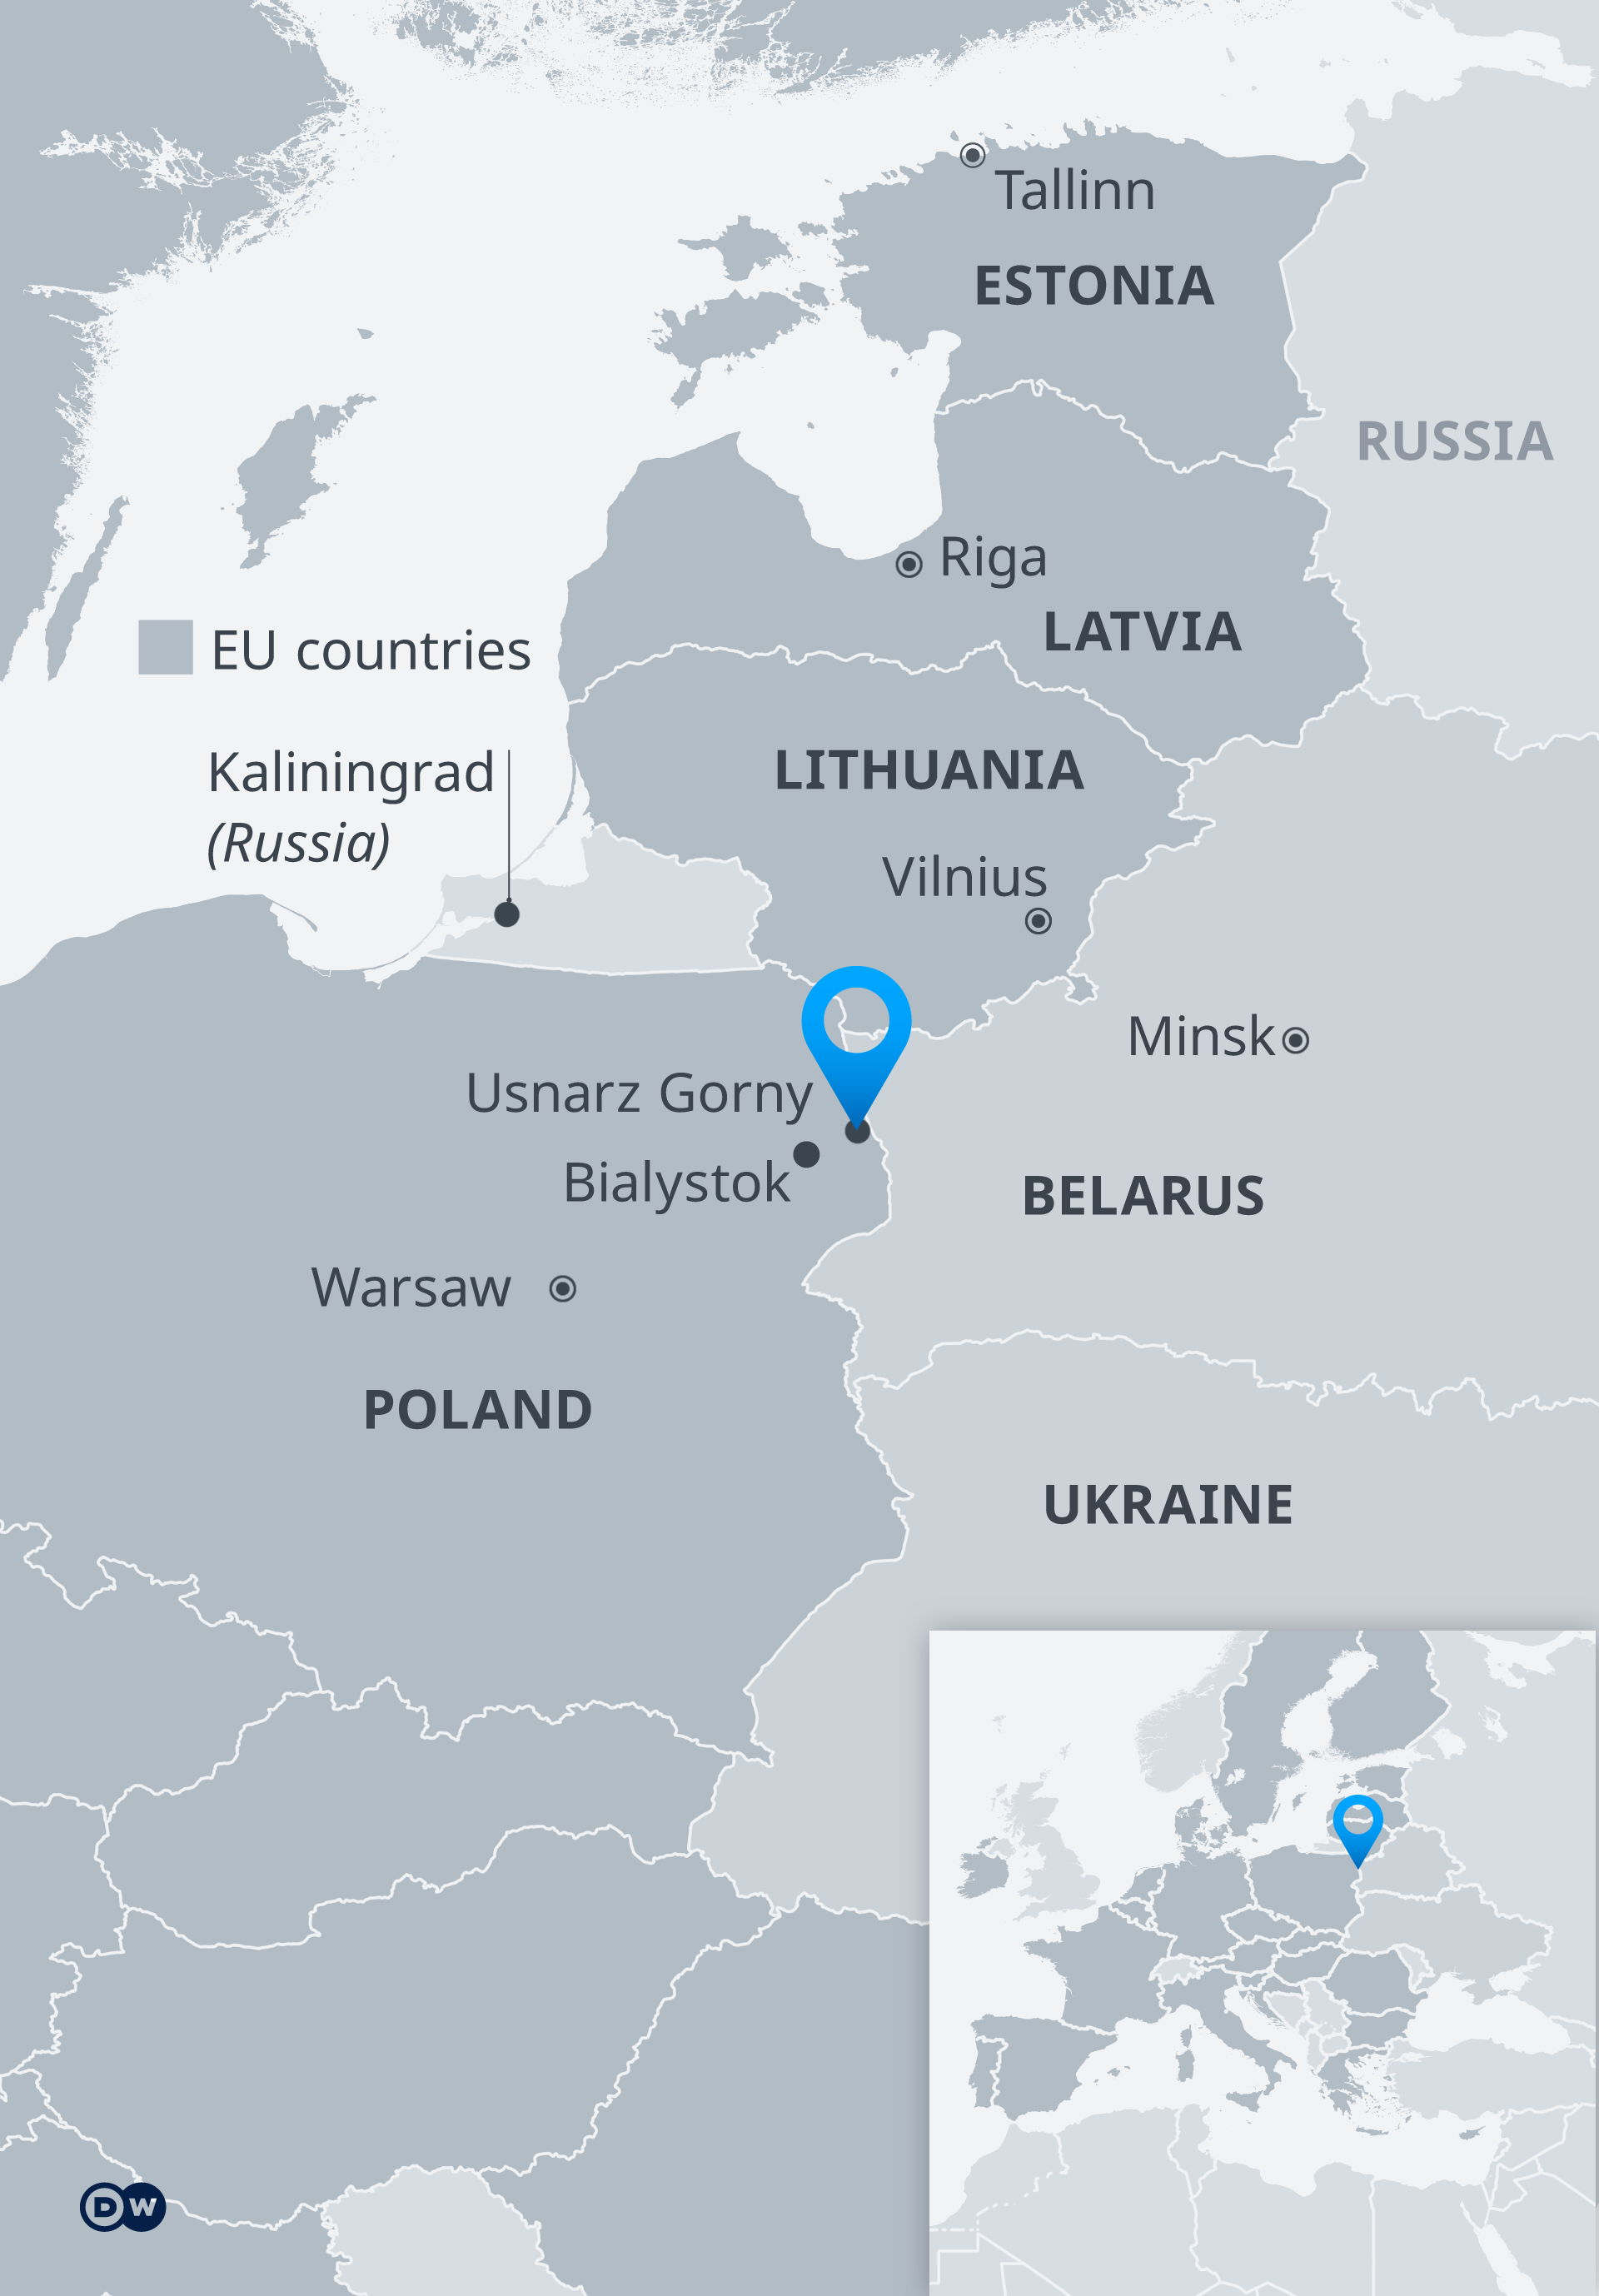 Map: Poland, Ukraine, Belarus, Lithuania and Kaliningrad, the Russian mainland north